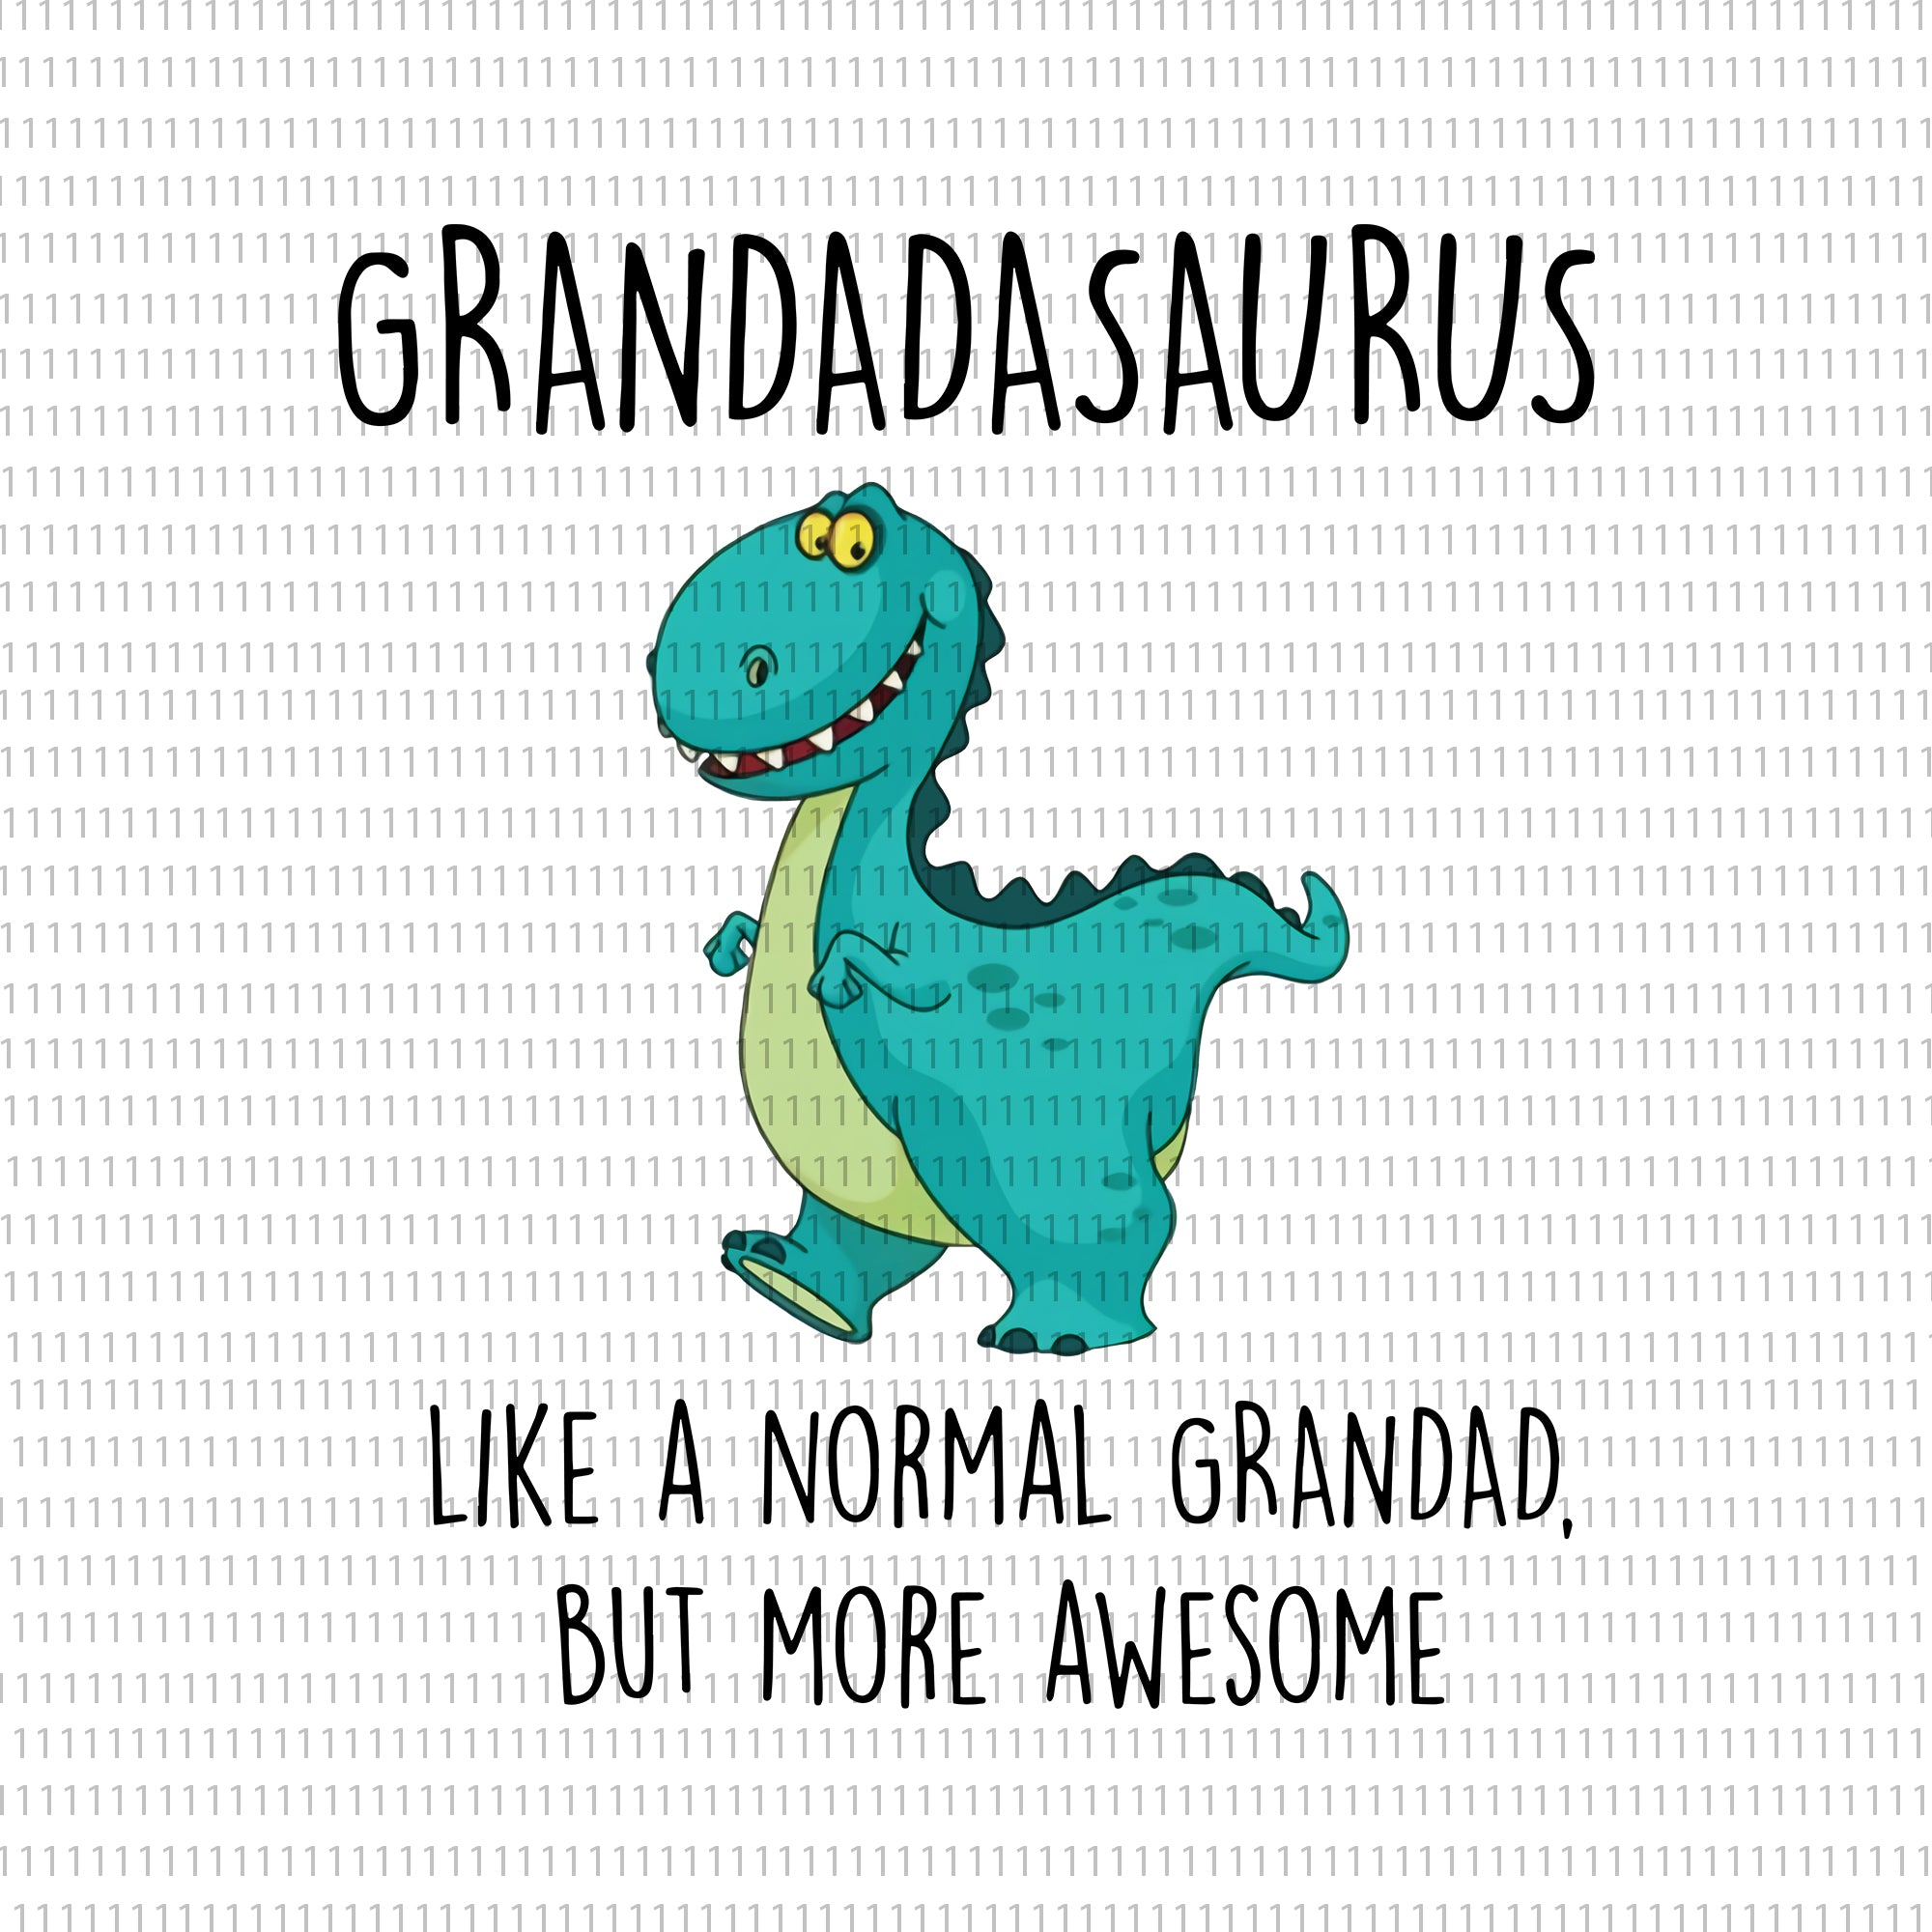 Grandadasaurus like a normal grandad but more awesome Svg